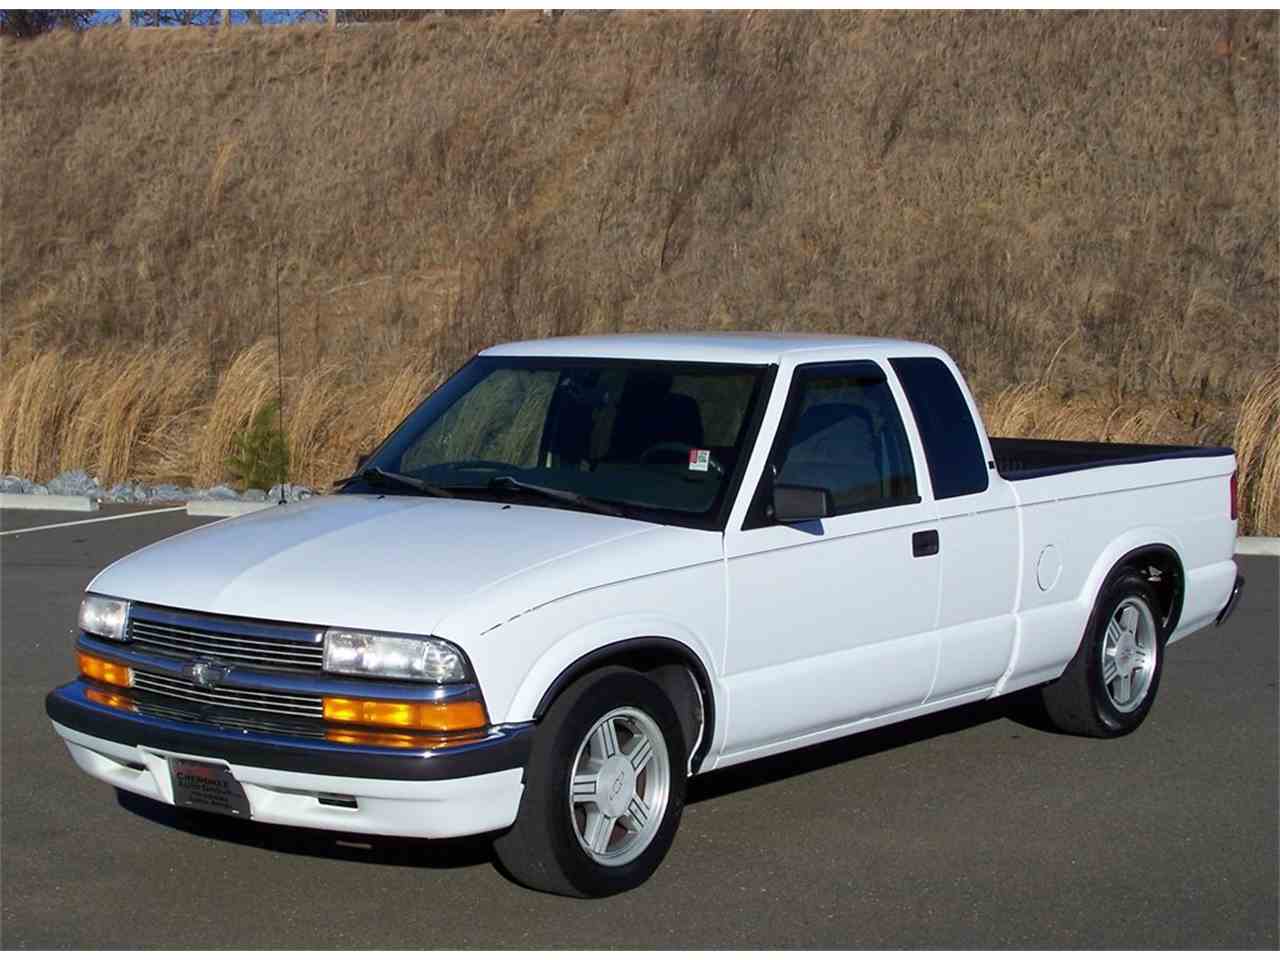 1998 Chevrolet S10 for Sale | ClassicCars.com | CC-1060749